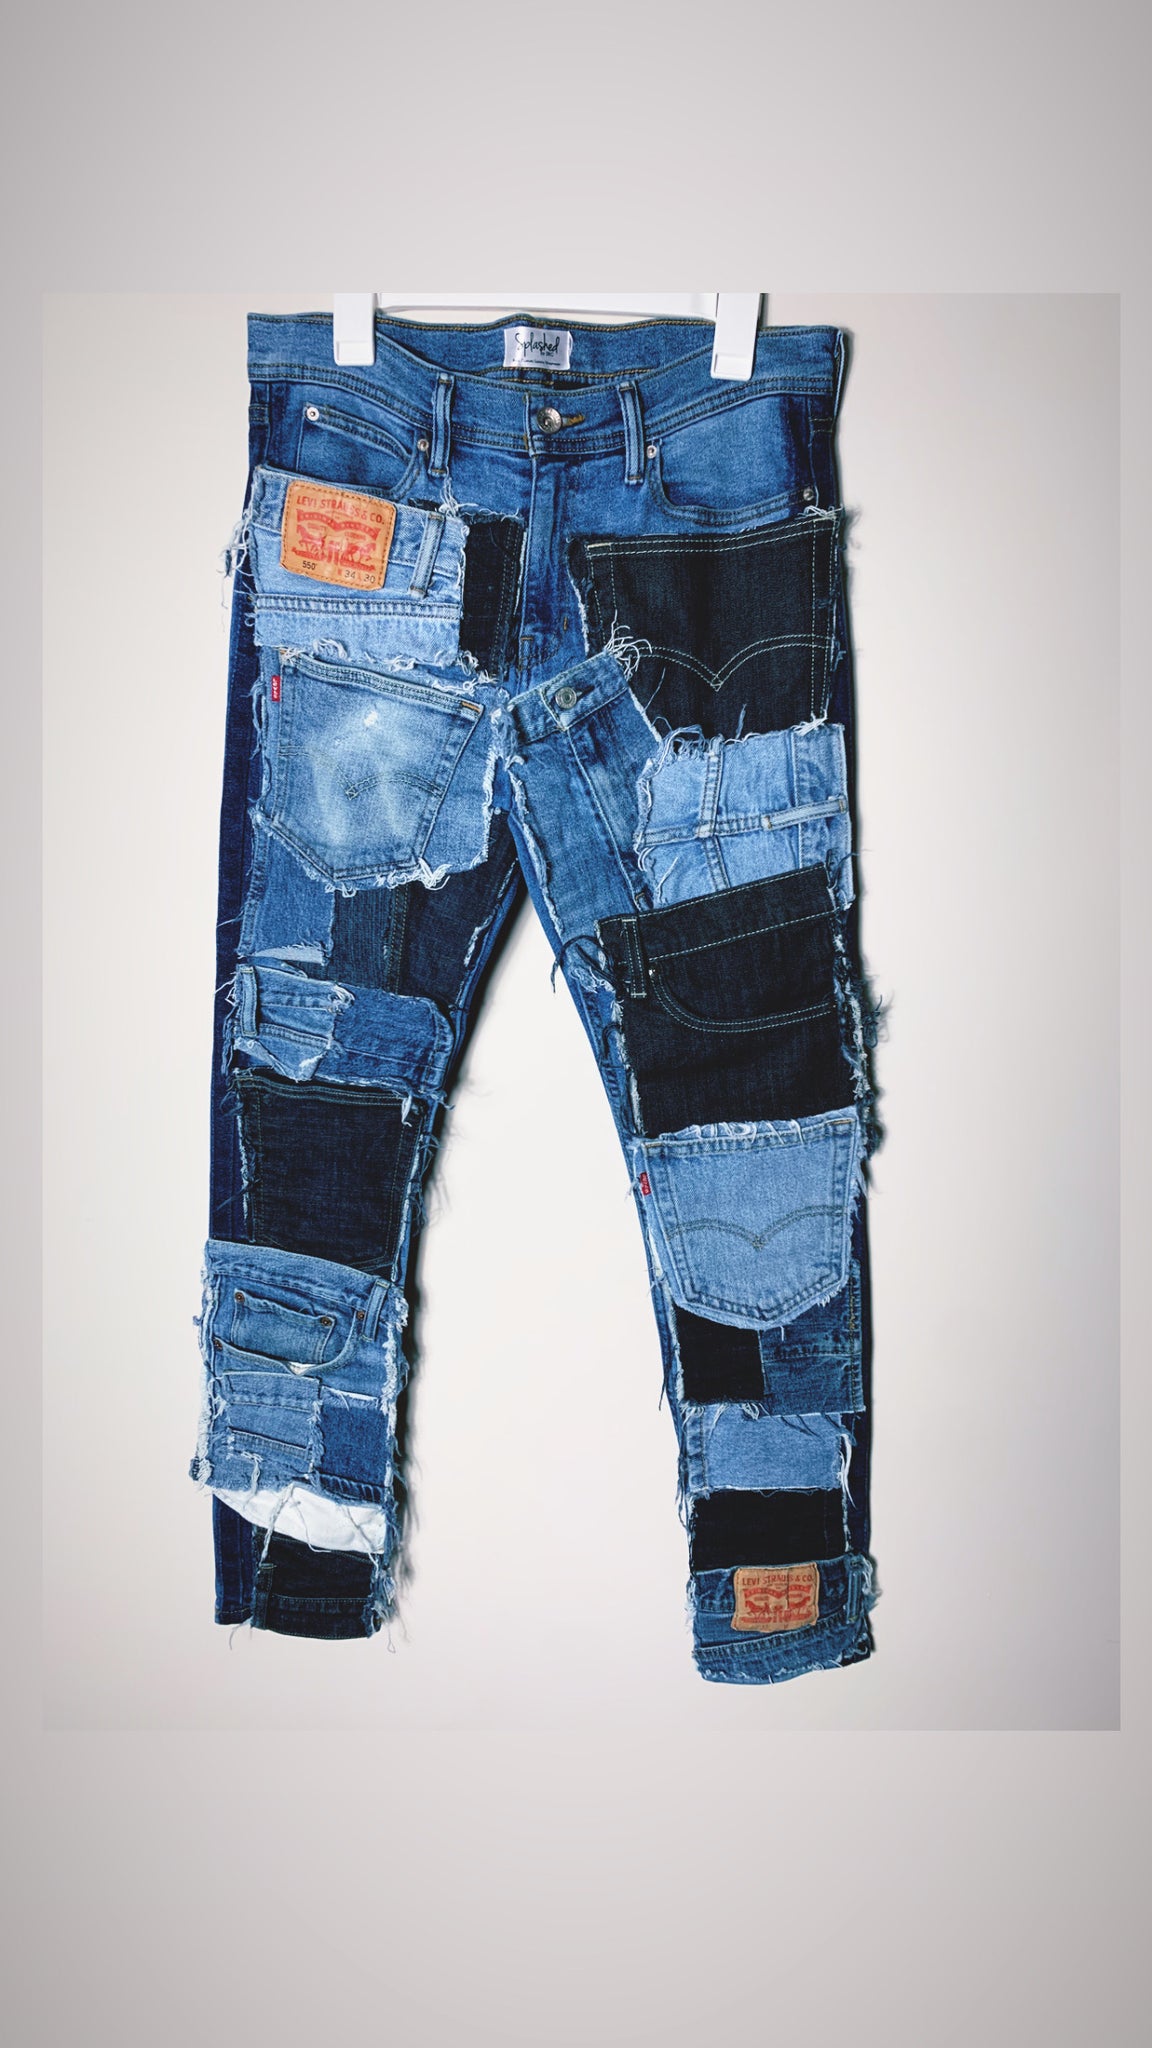 Levi's Patchwork Jeans – Splashed by DKG